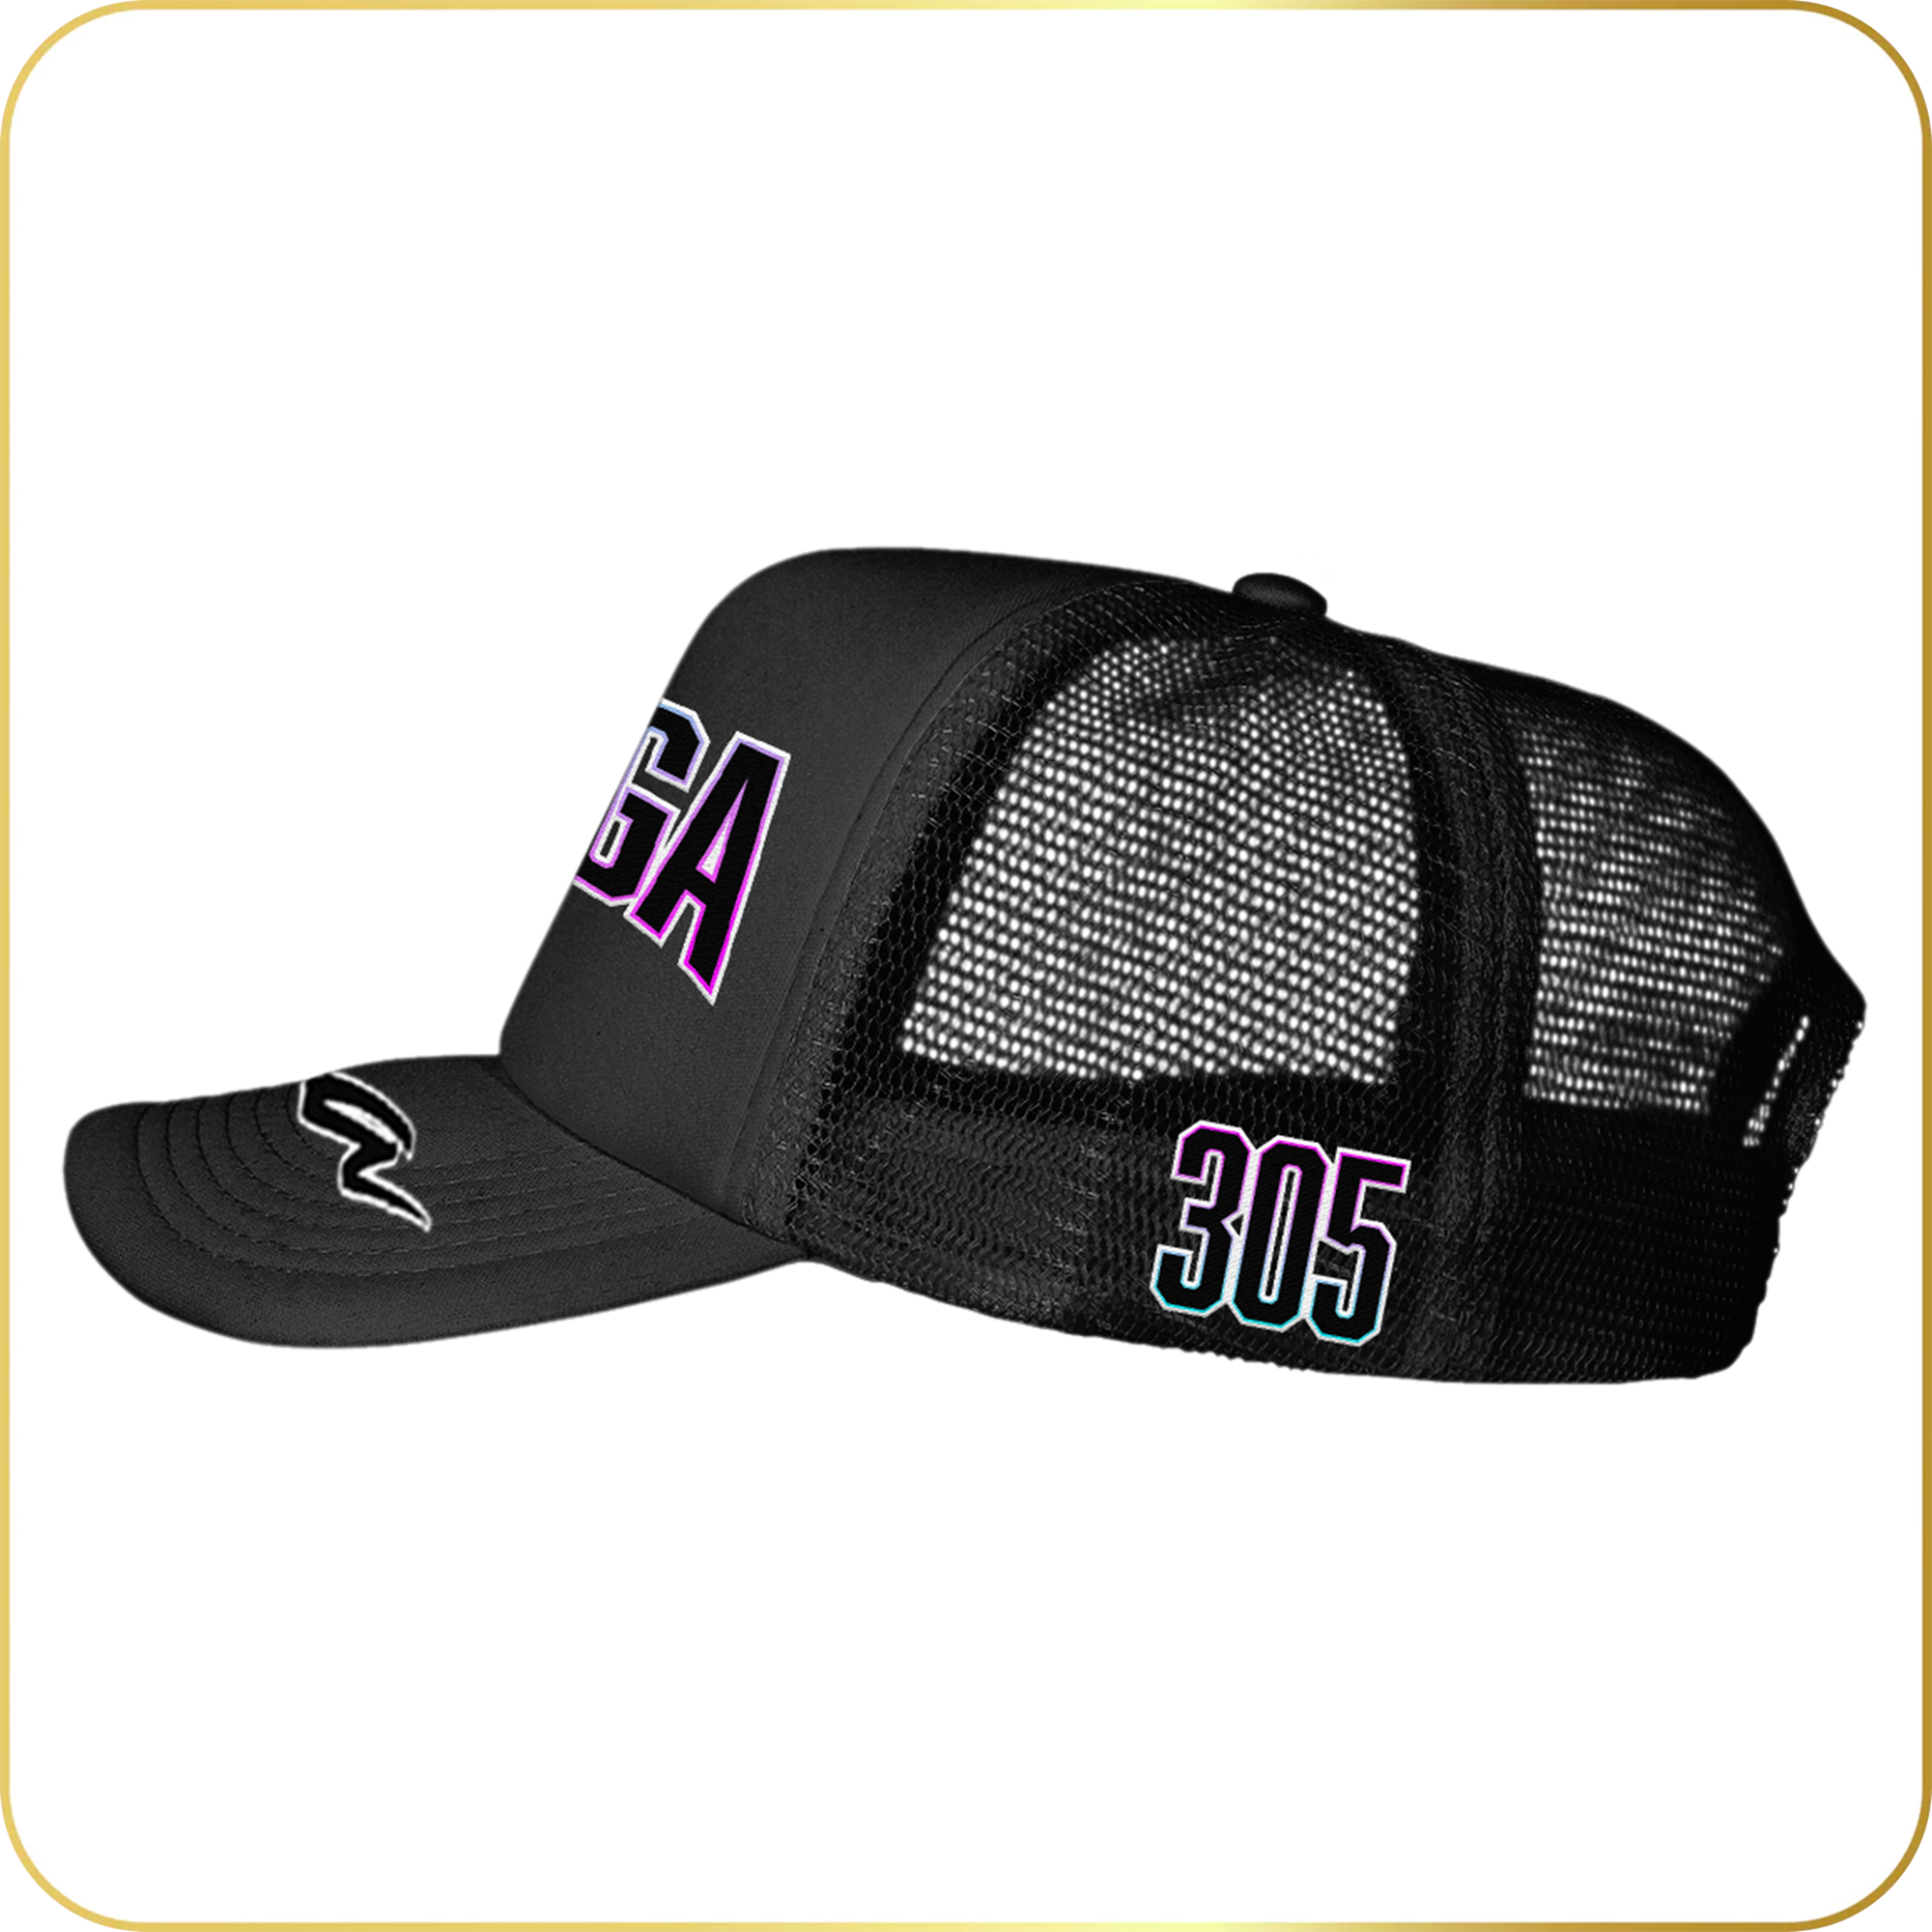 305 Trucker Hat